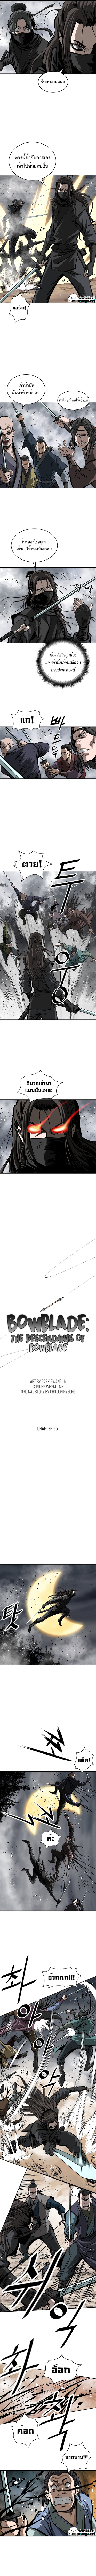 Bowblade (The Descendants of Bowblade) 25 (2)